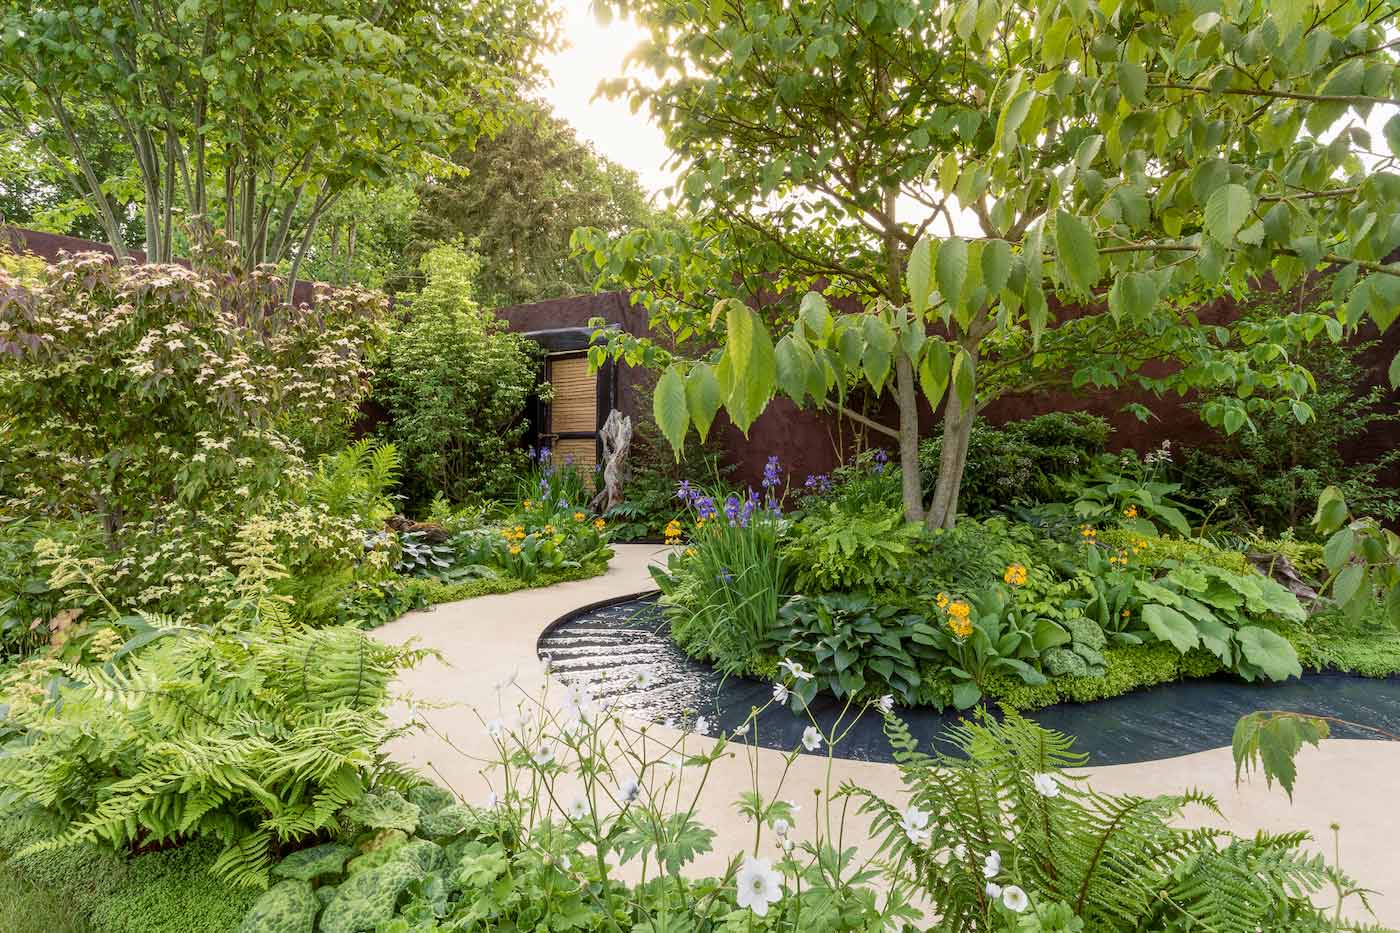 Garden design Gold Award Winner: Boodles Travel Garden